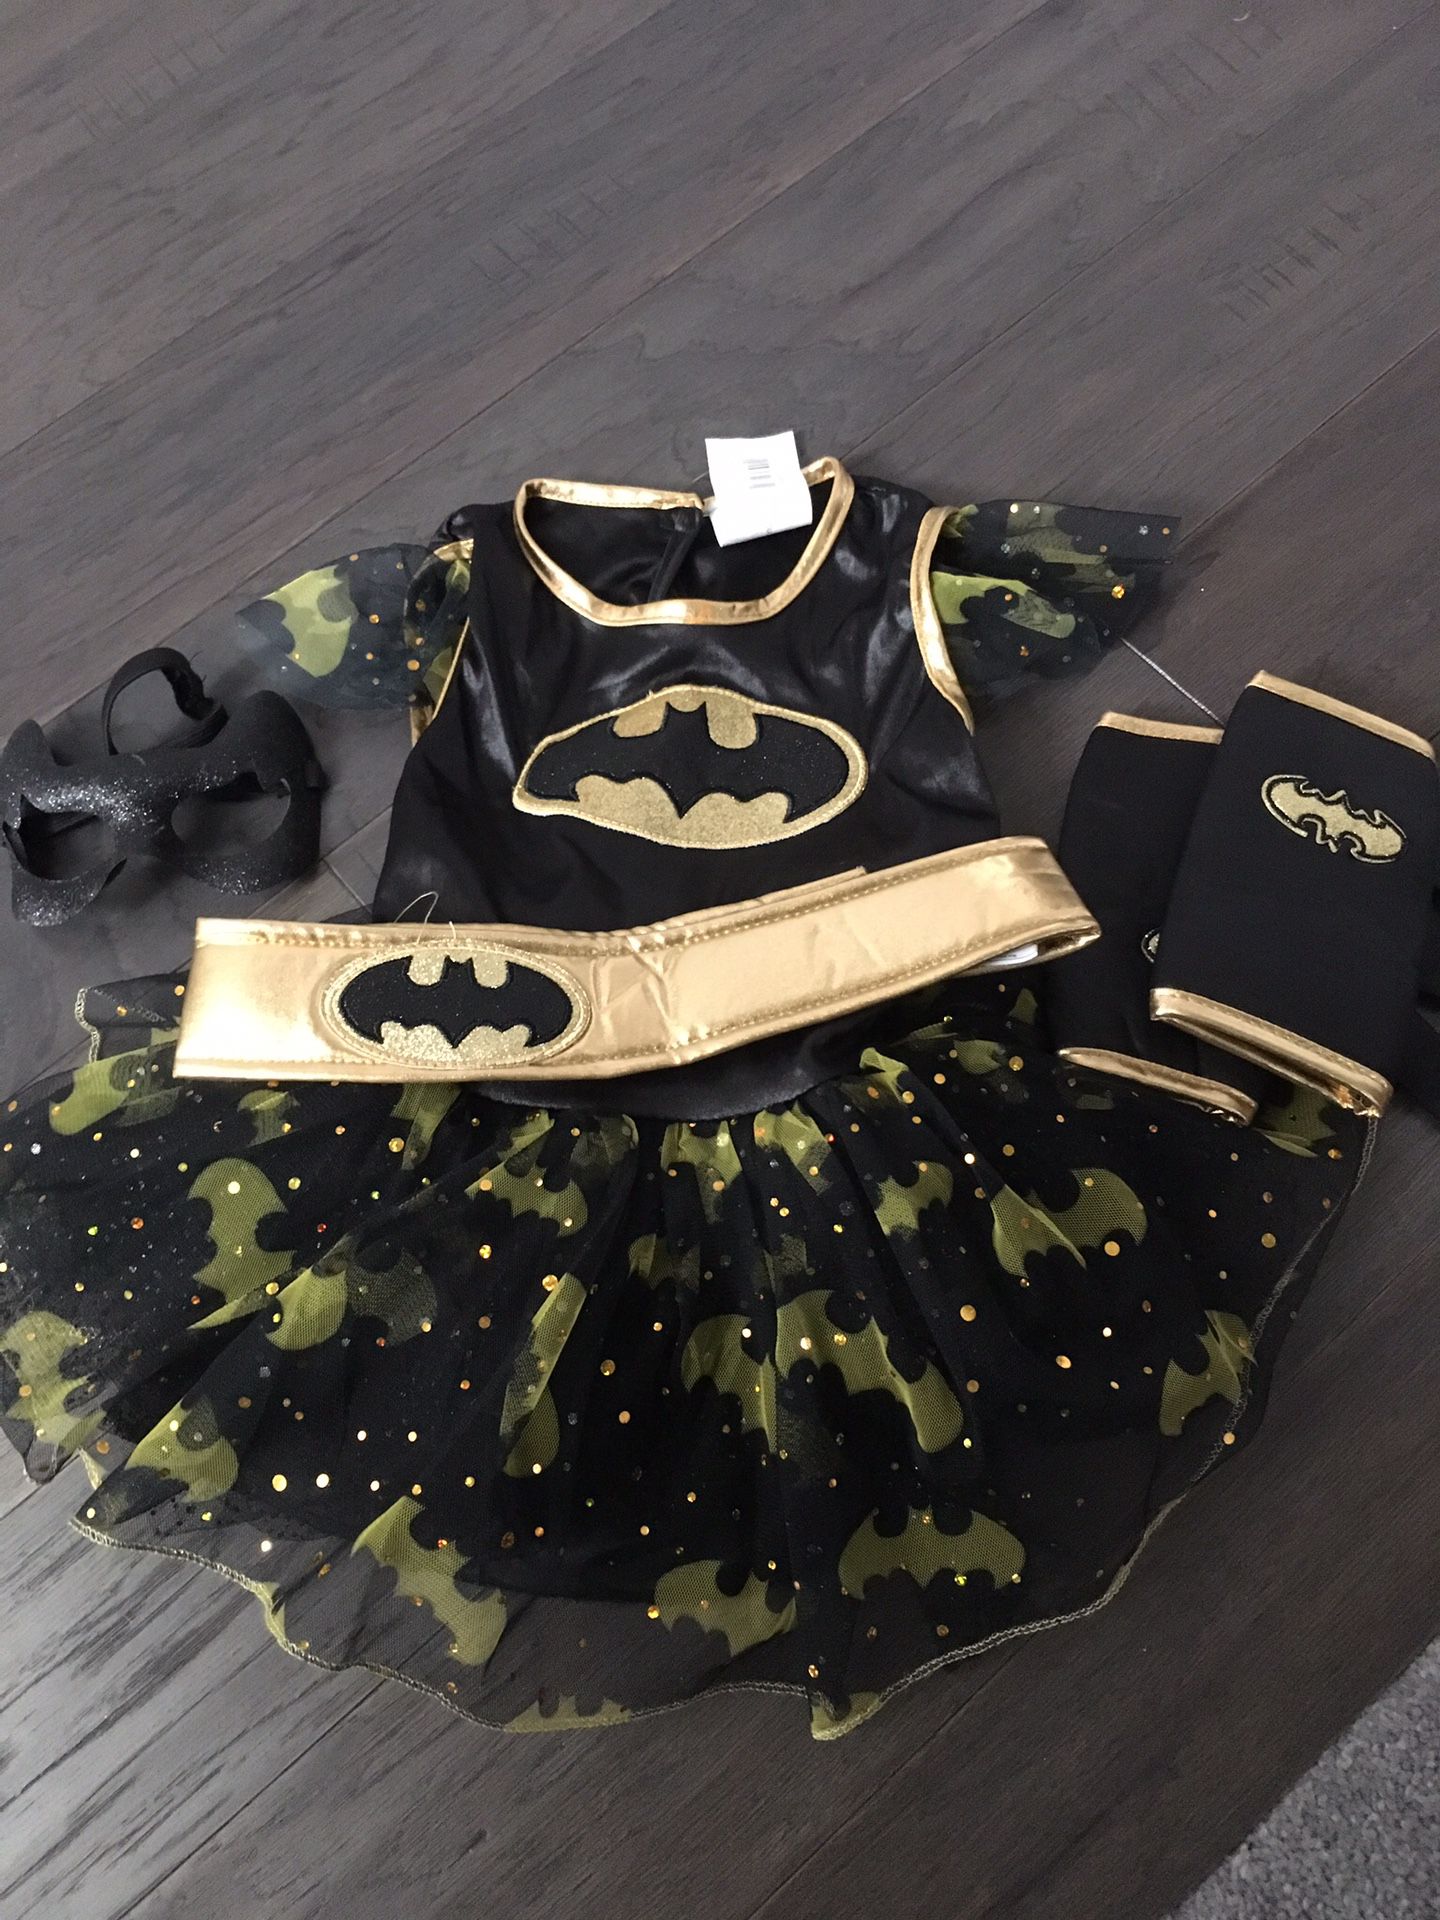 Batgirl costume size small